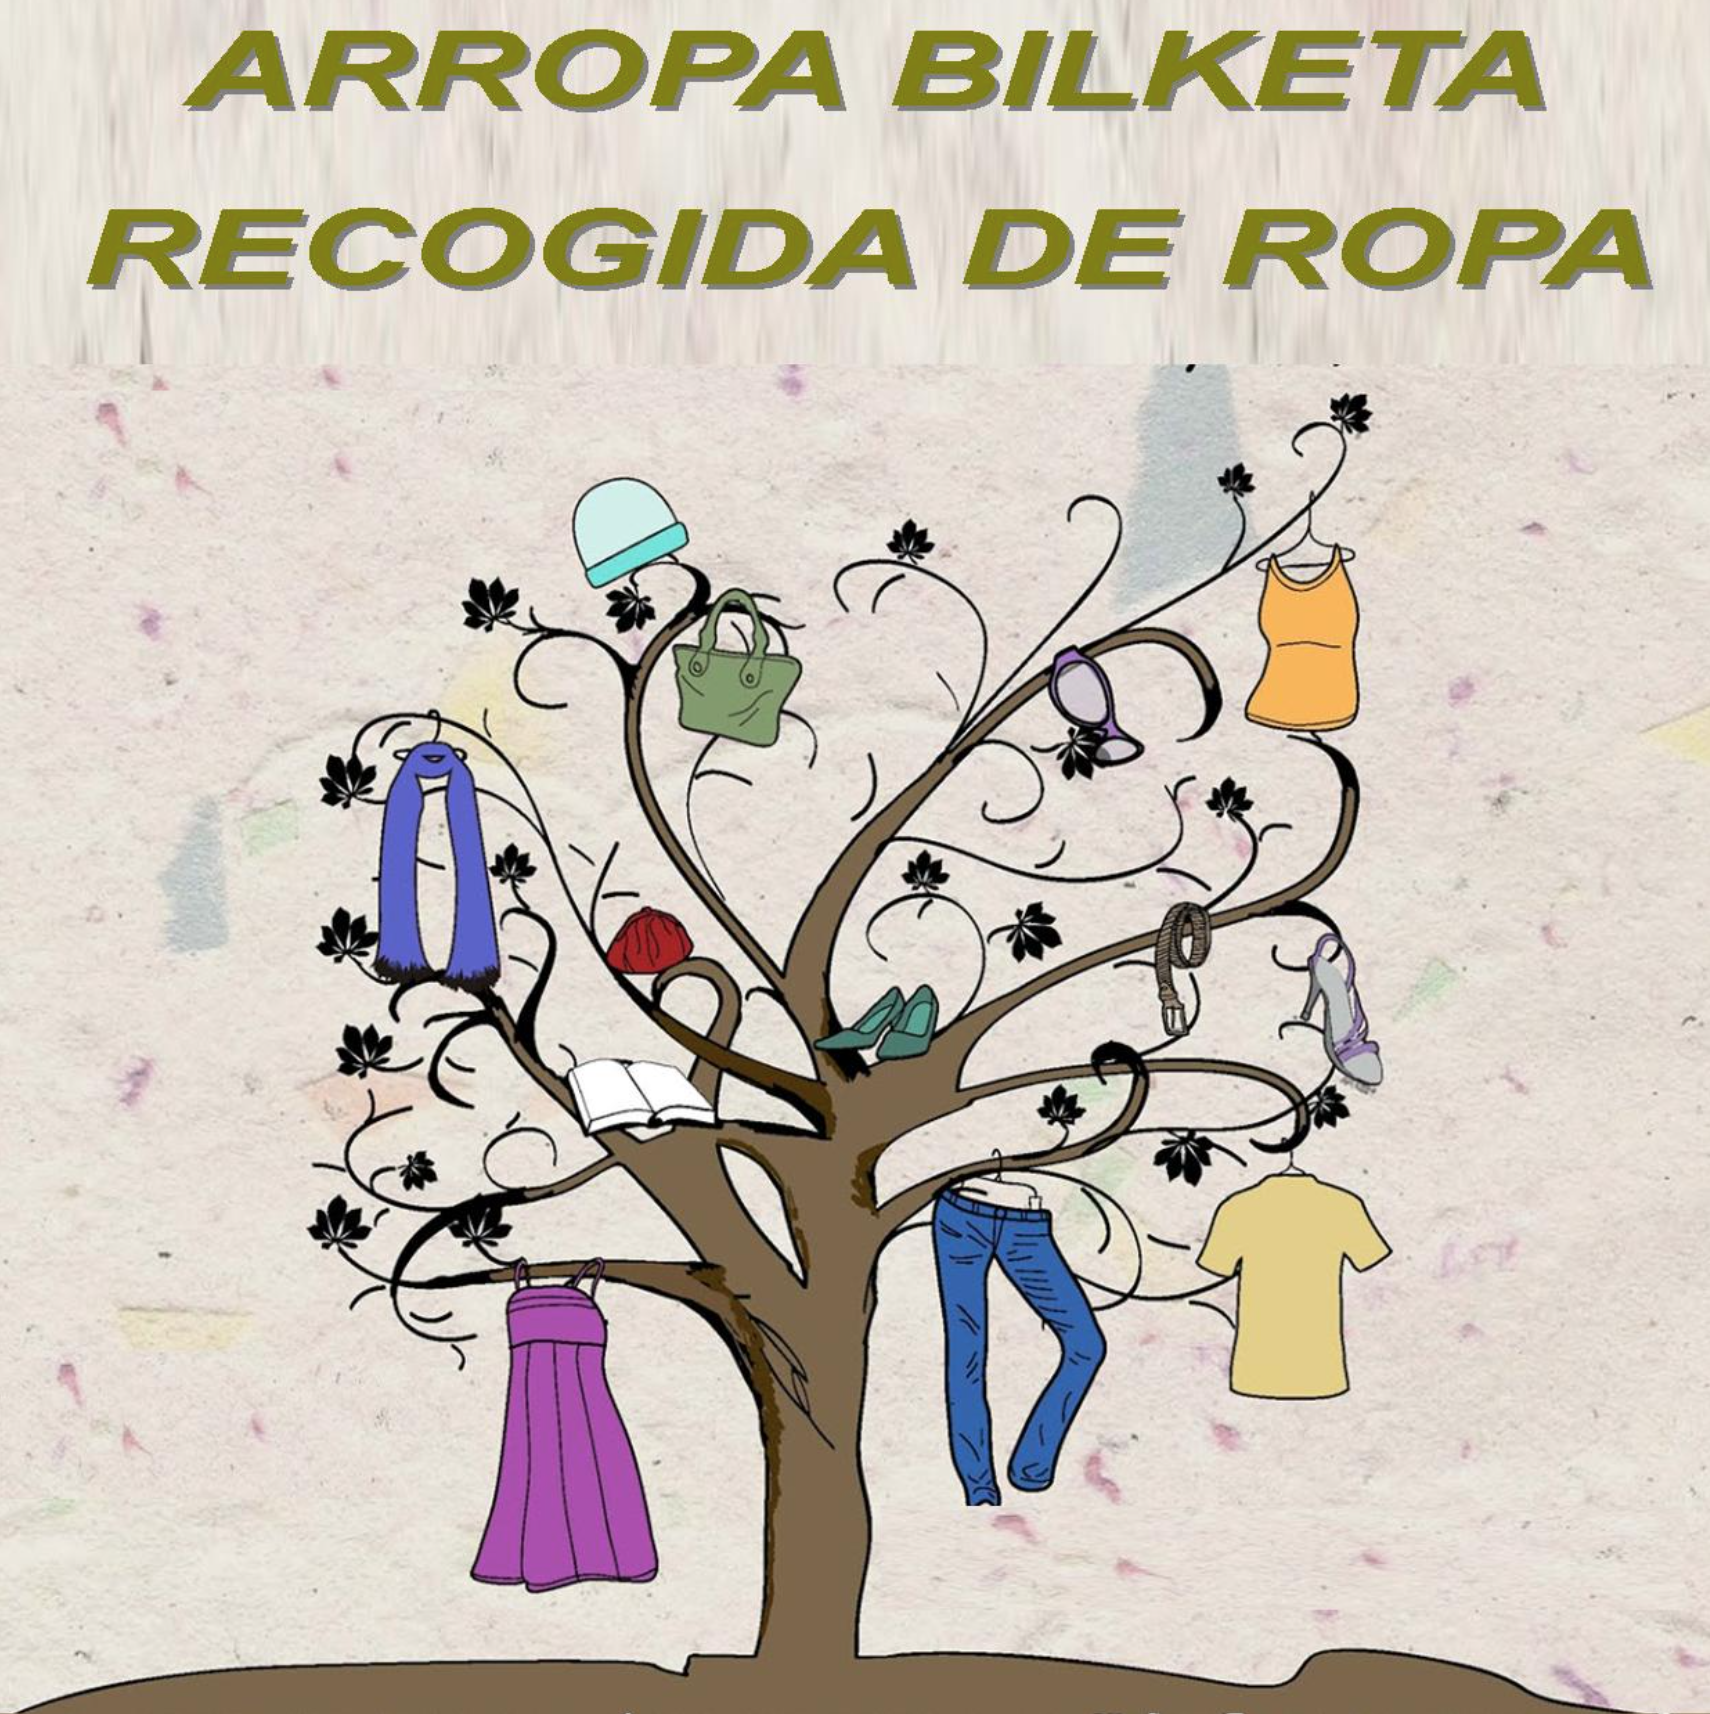 RECOGIDA DE ROPA